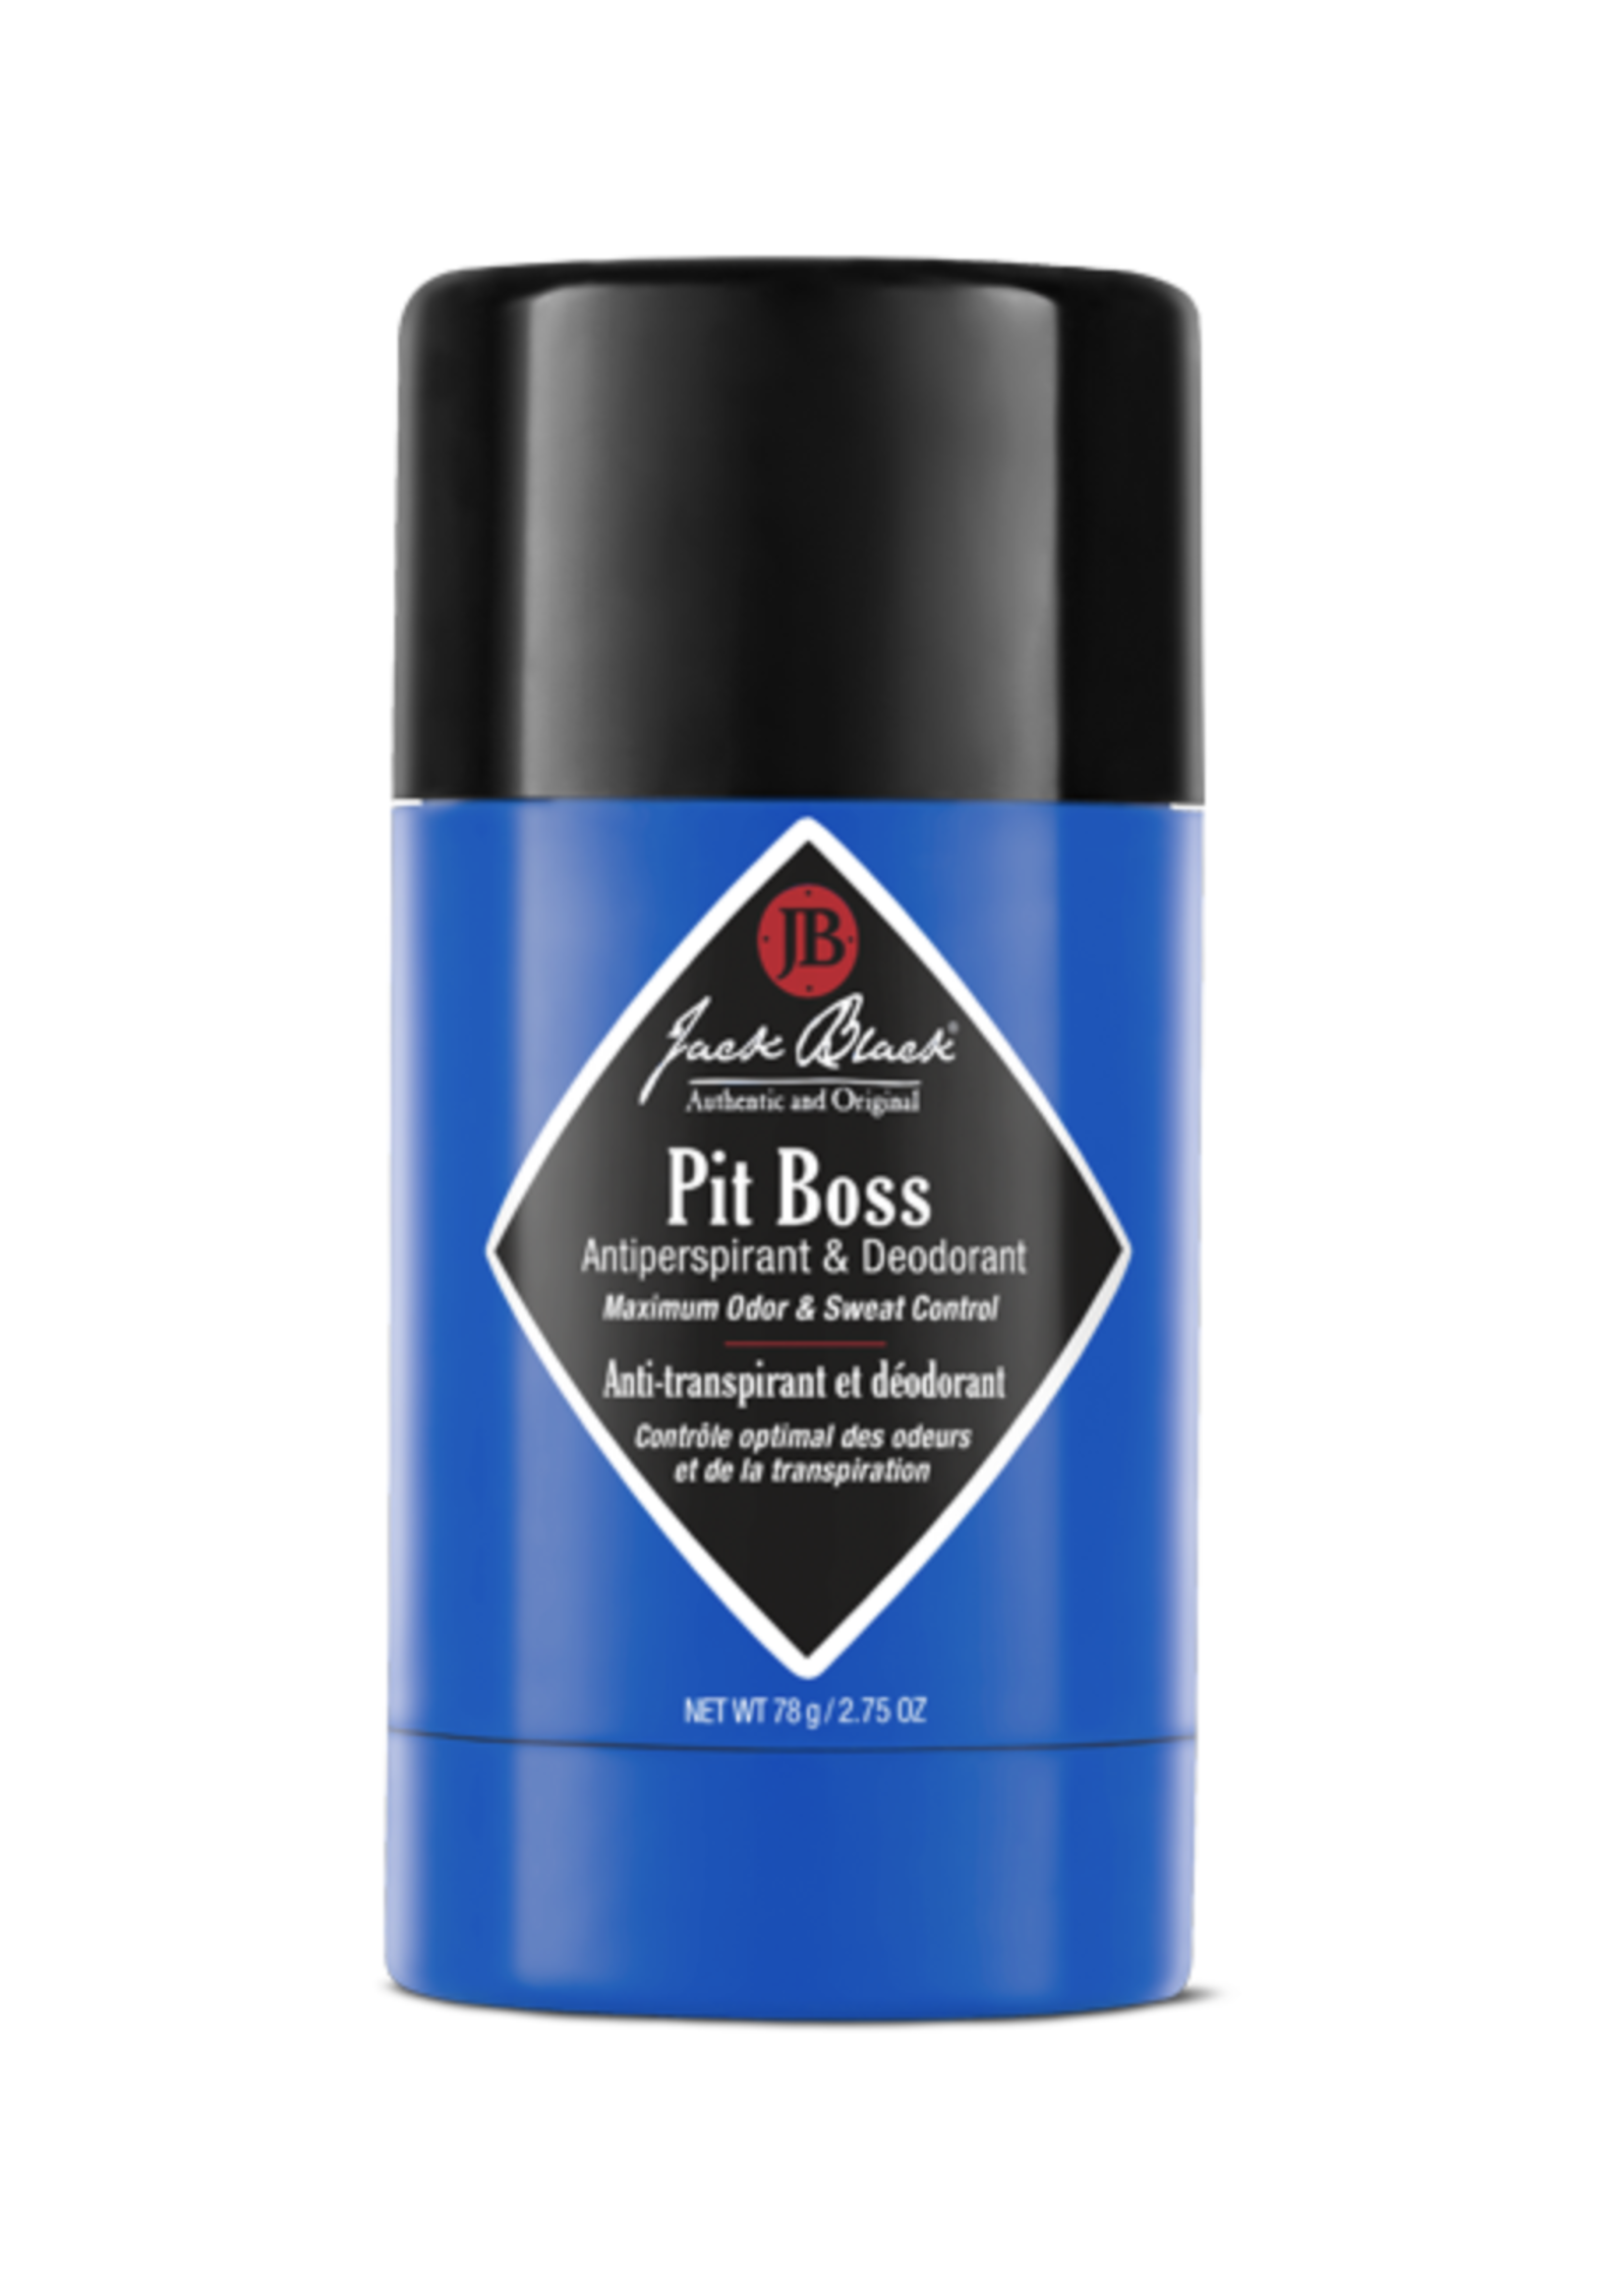 Jack Black Pit Boss Antiperspirant & Deodorant 2.75oz